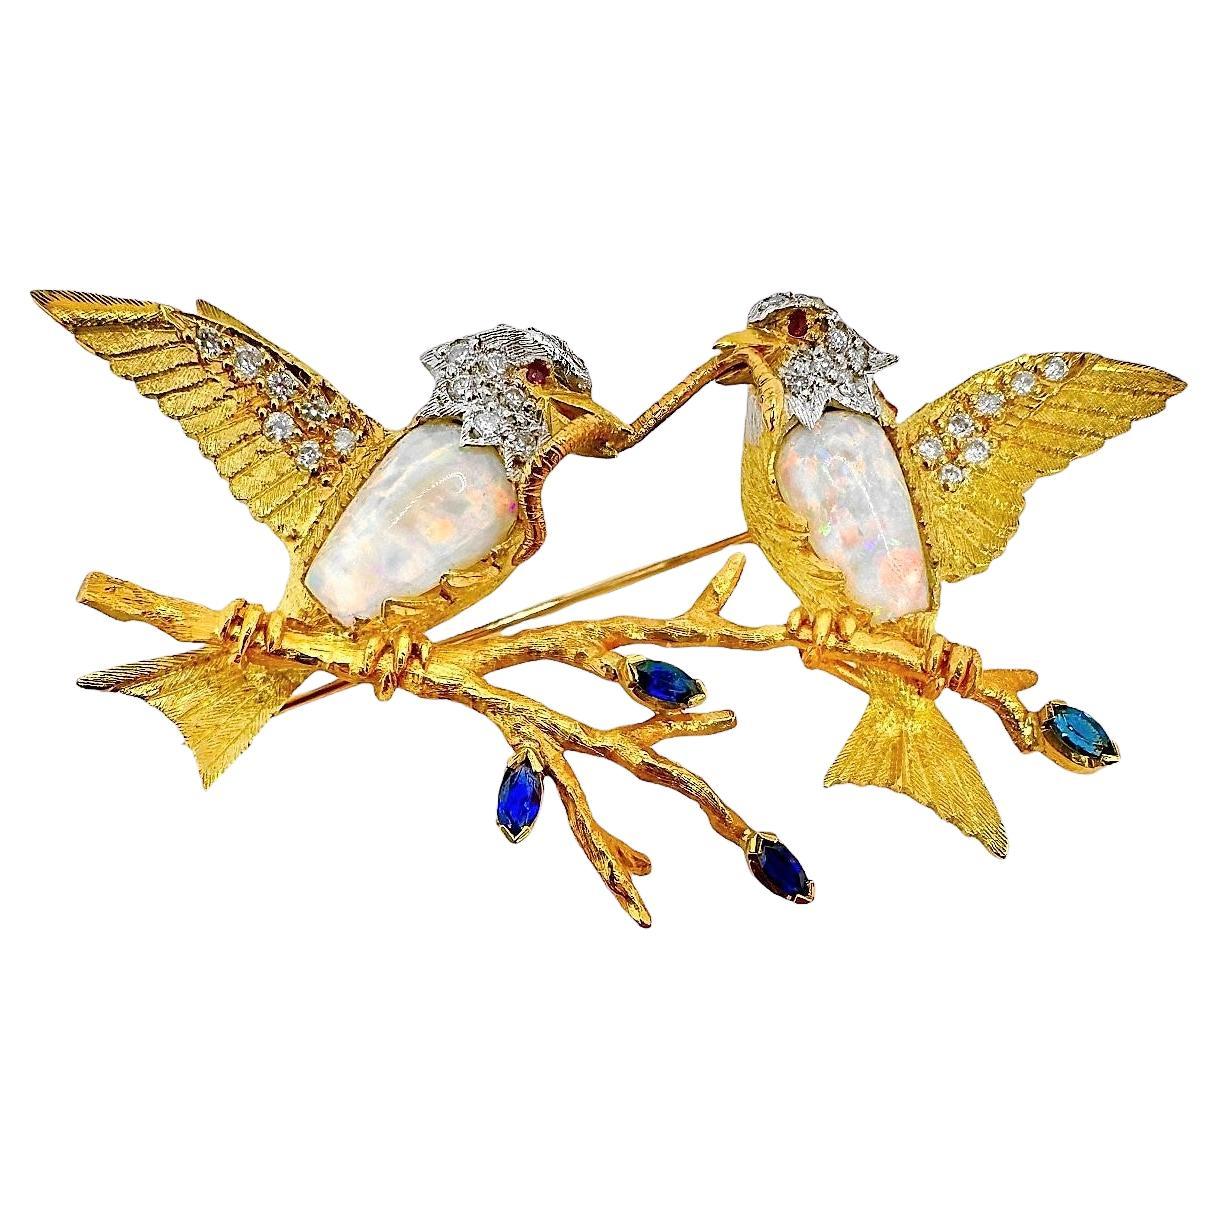 E. Wolf & Co 18k Gold, Opal, Sapphire & Diamond Brooch with 2 Birds on a Branch